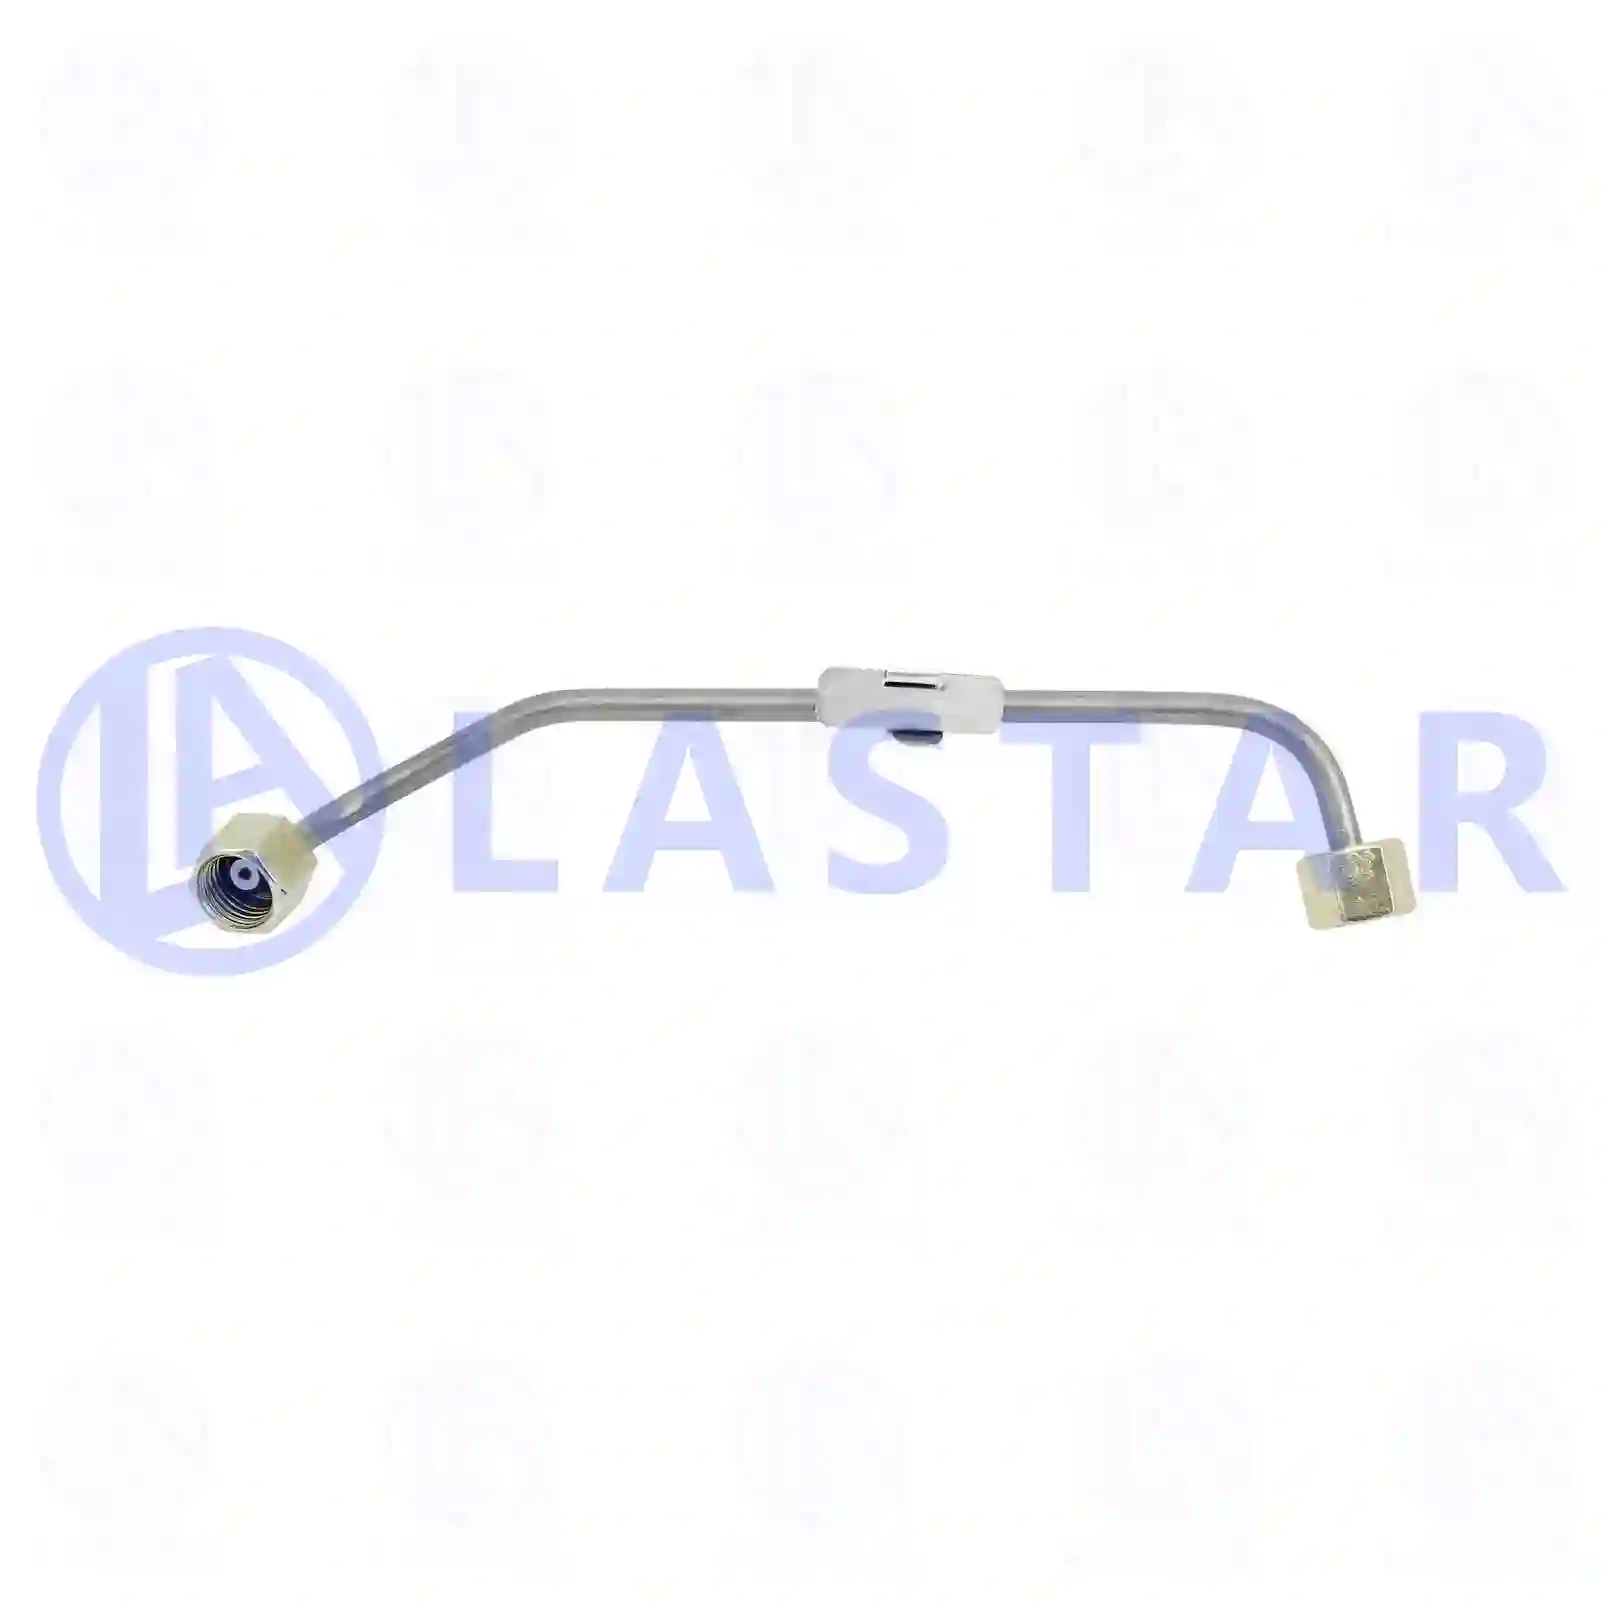  Pressure line, injection pump || Lastar Spare Part | Truck Spare Parts, Auotomotive Spare Parts